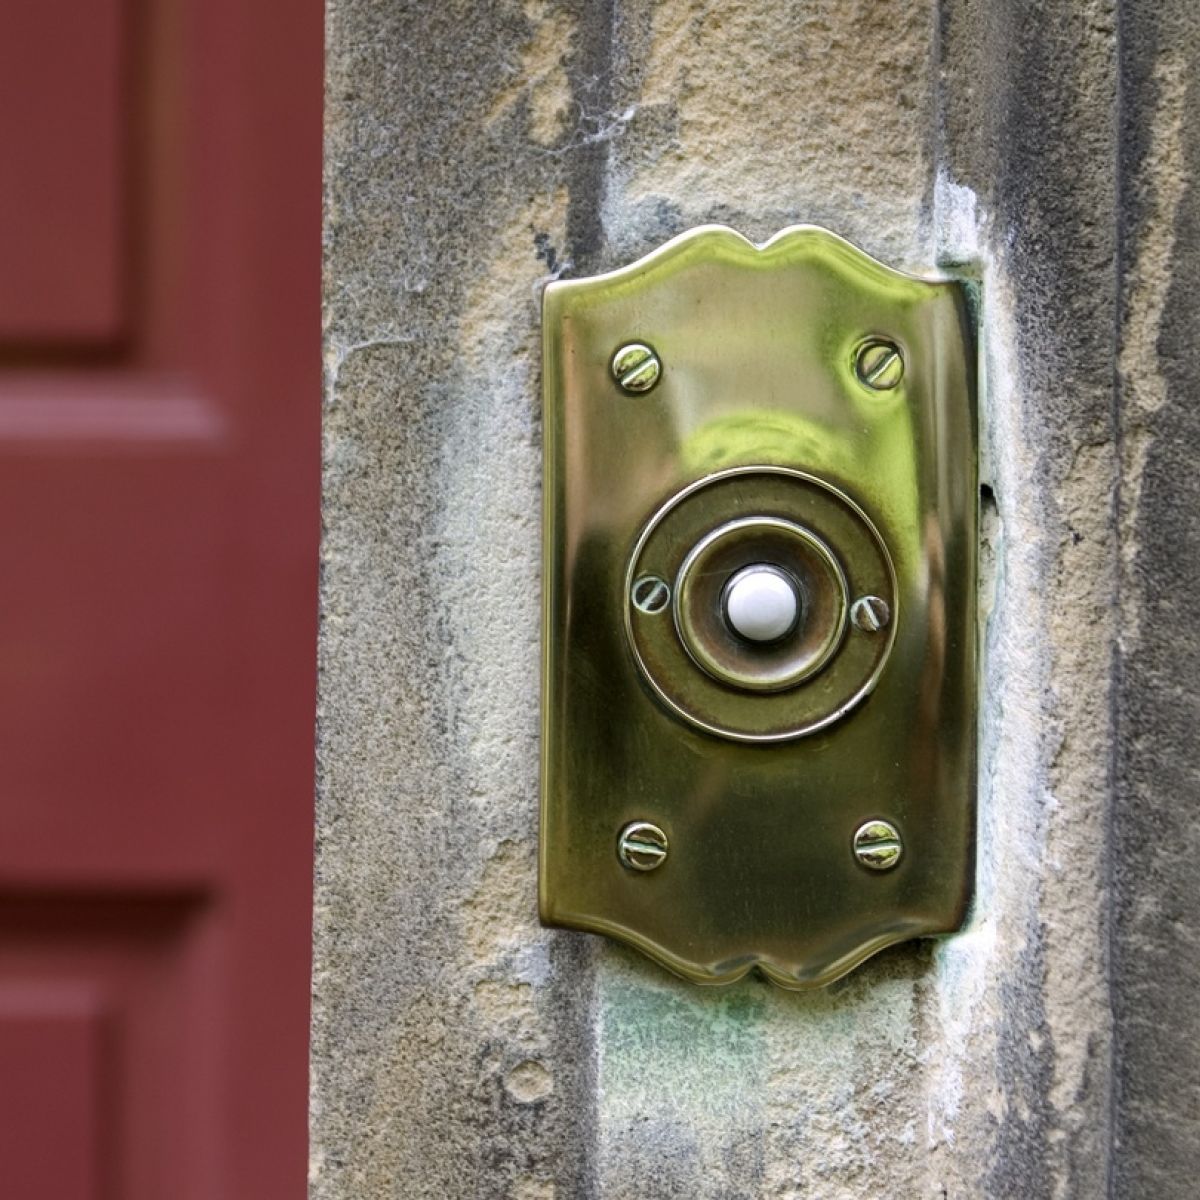 ring doorbell not ringing in house